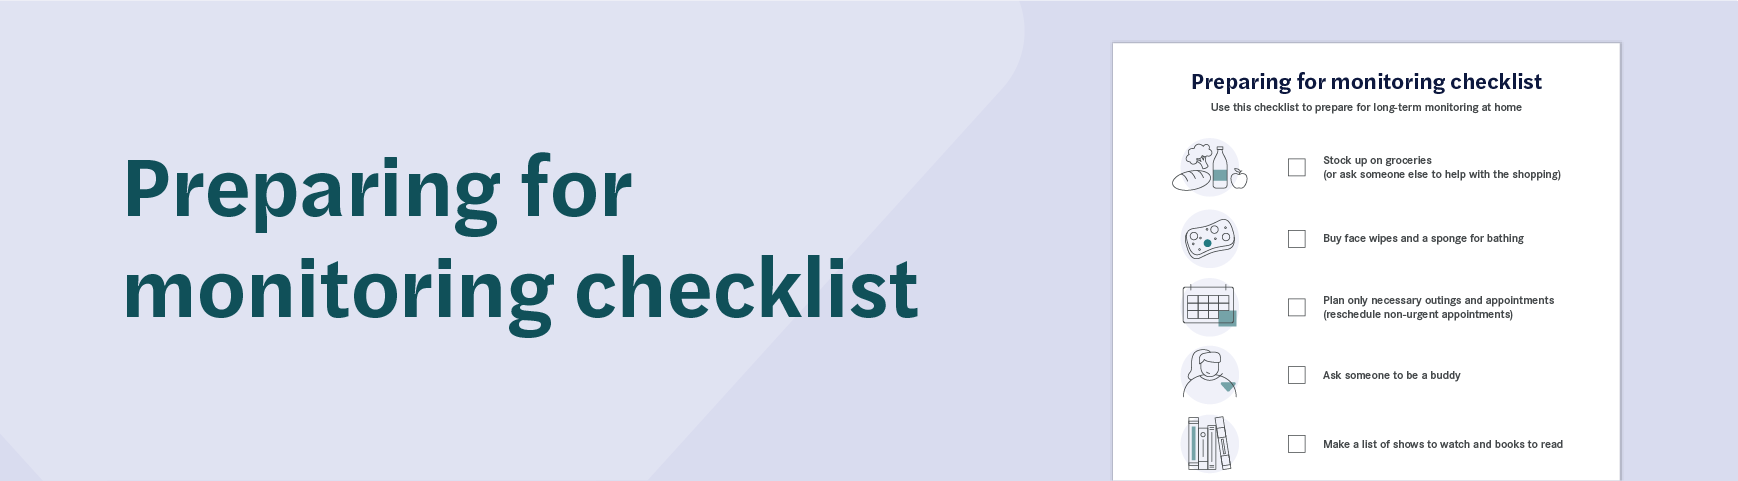 Download the Preparing for Monitoring Checklist